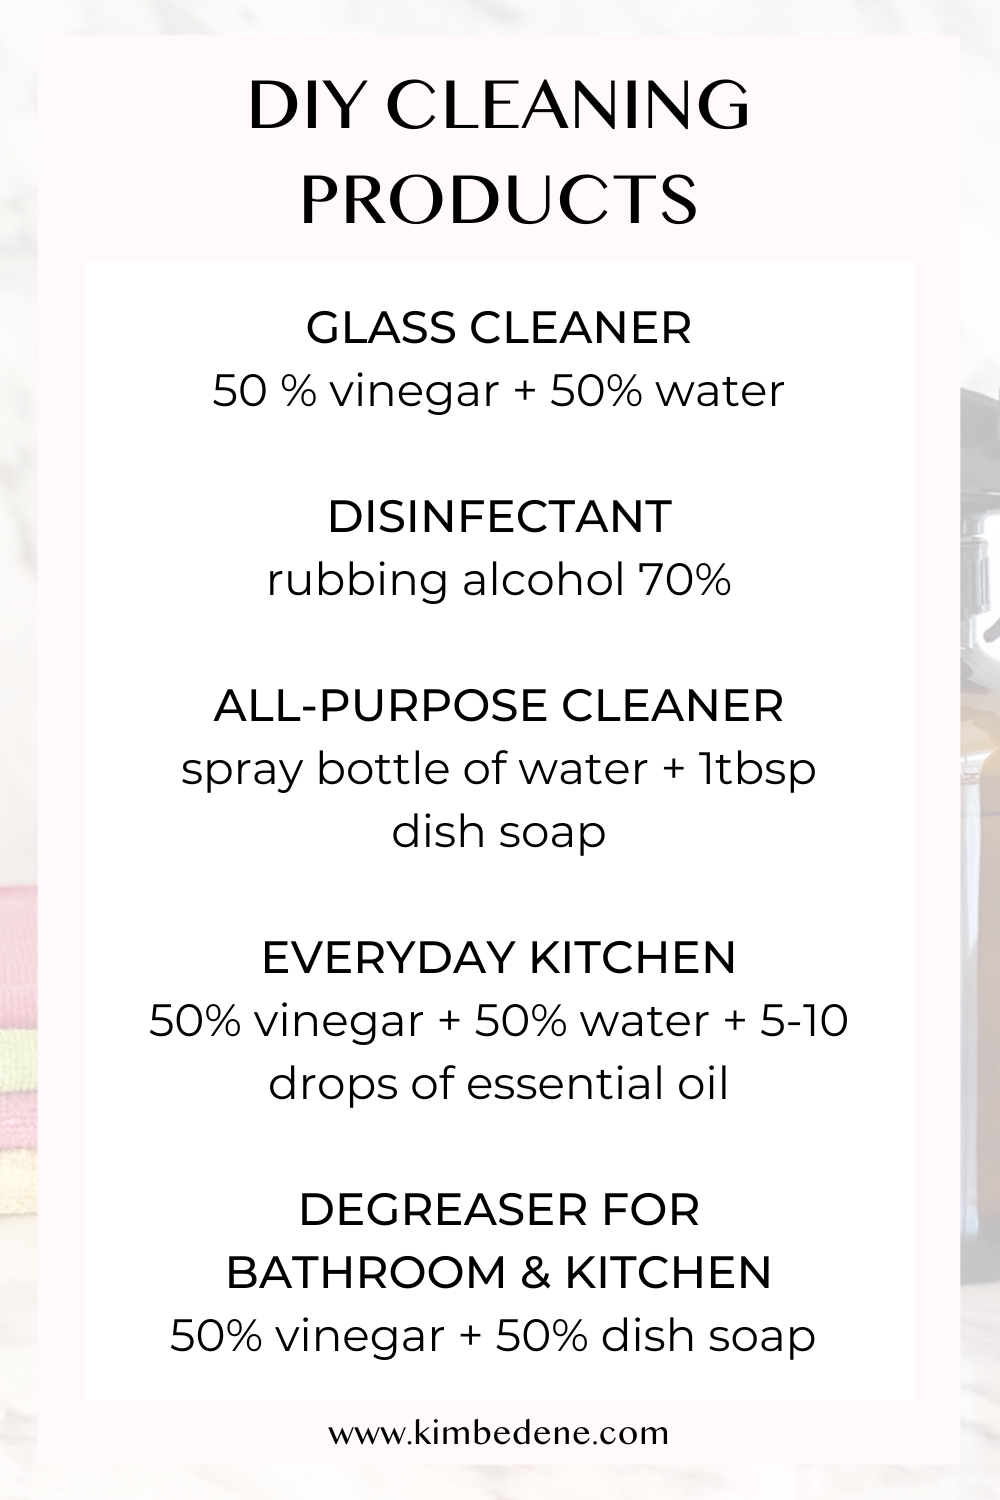 7 minimalist cleaning tips + DIY recipes - Kim Bedene